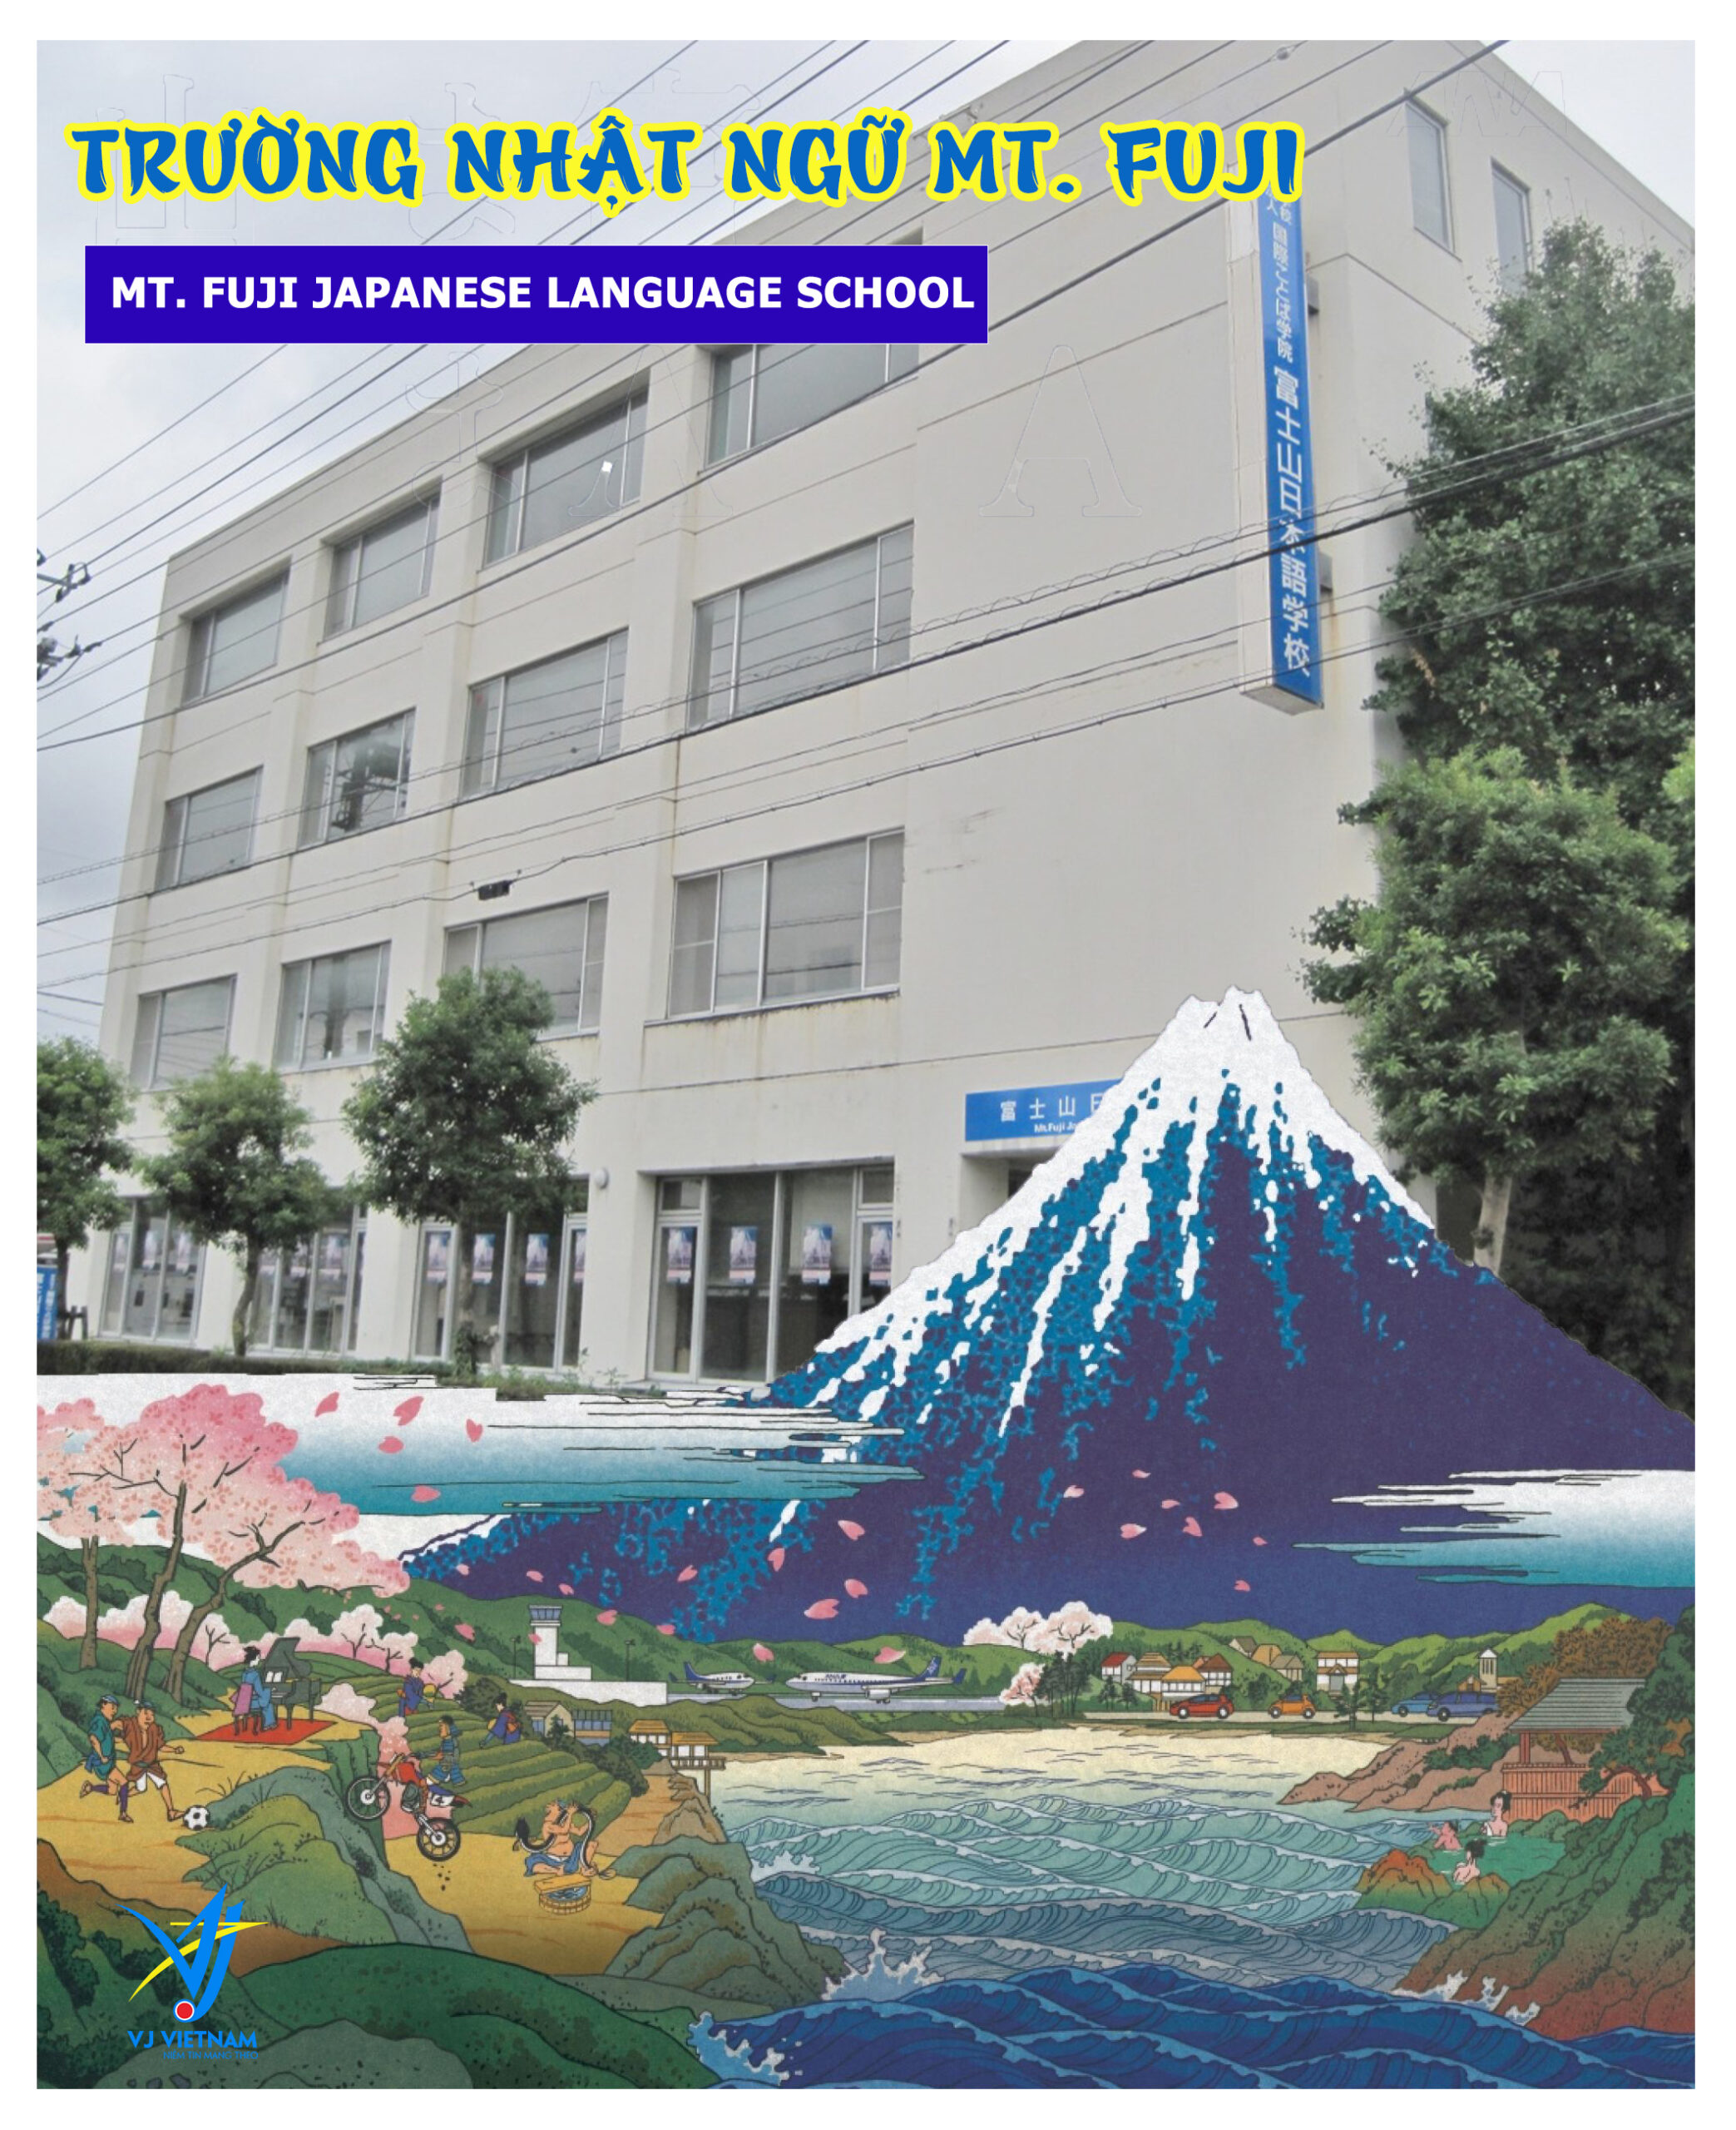 Trường Nhật Ngữ MT. Fuji - Mt. Fuji Japanese Language School